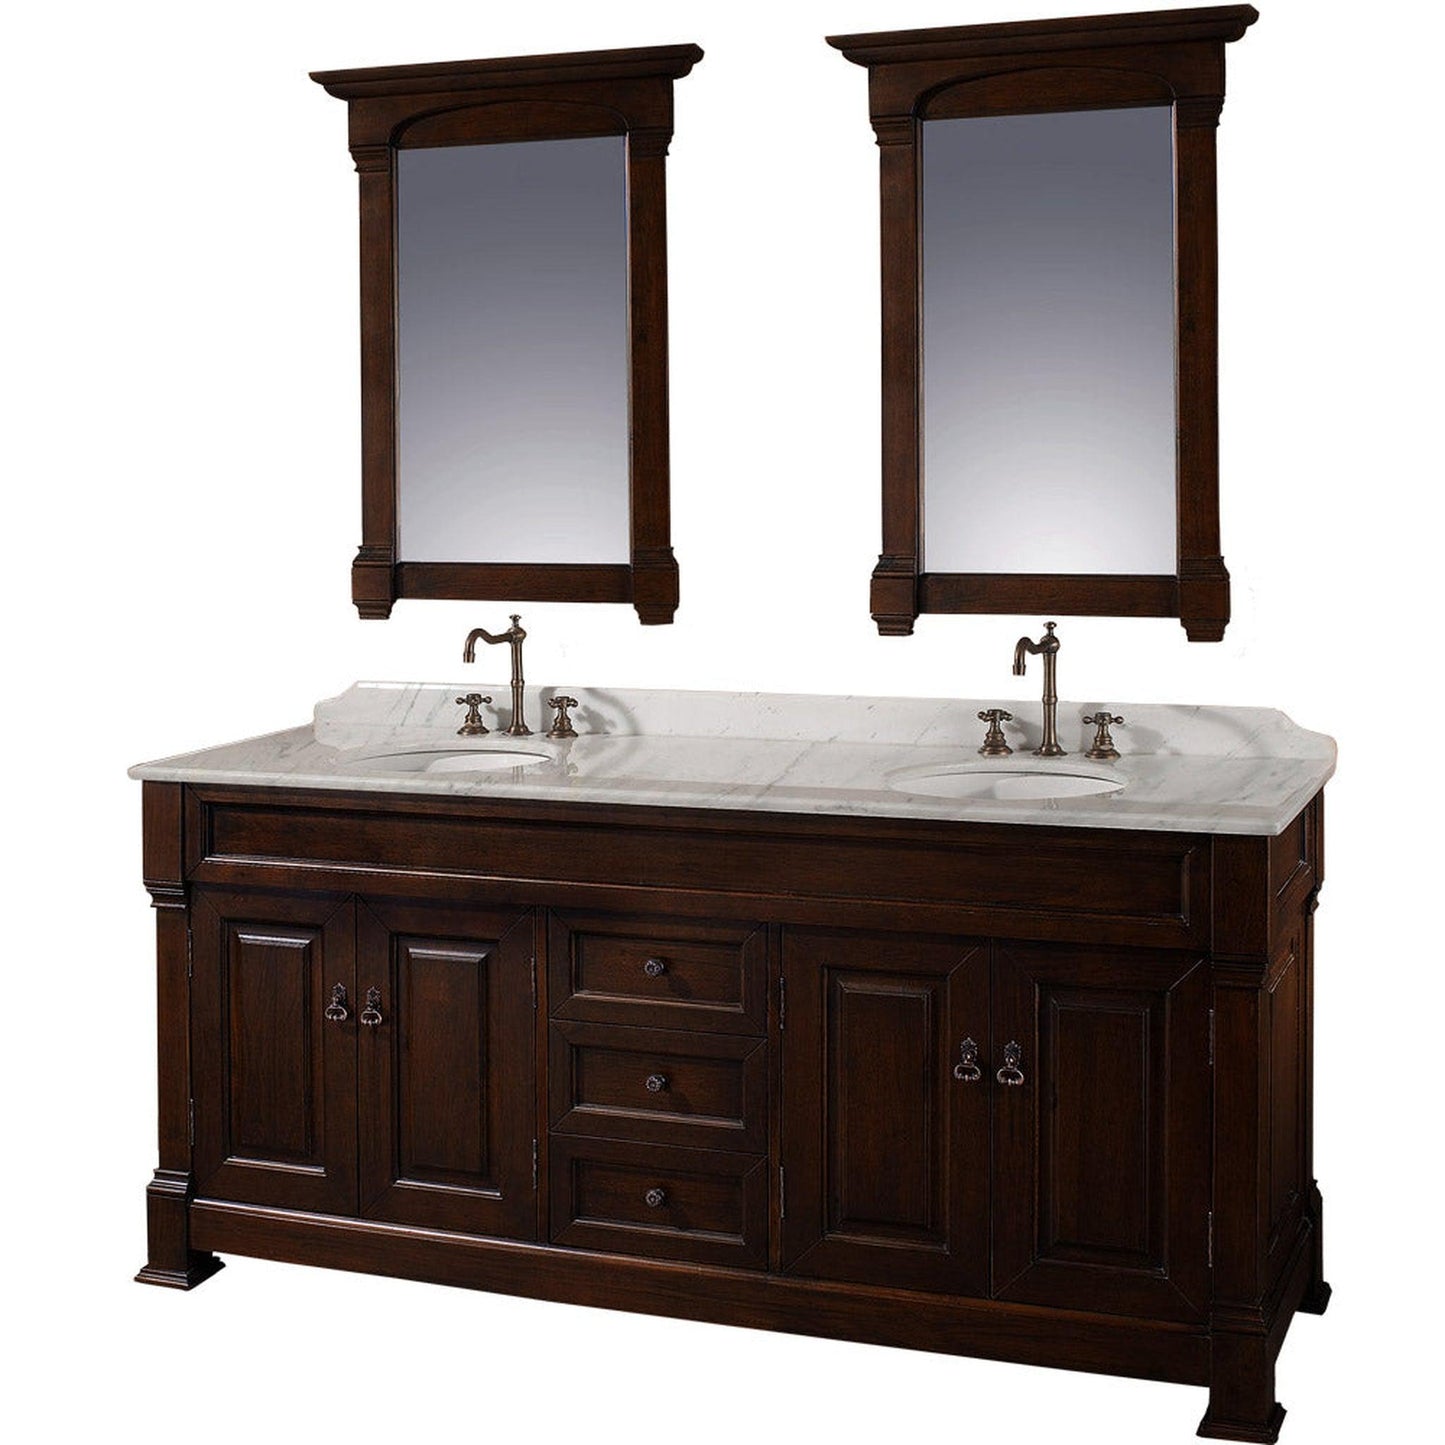 Wyndham Collection Andover 72" Double Bathroom Vanity in Dark Cherry With White Carrara Marble Countertop, Undermount Oval Sink & 28" Mirror